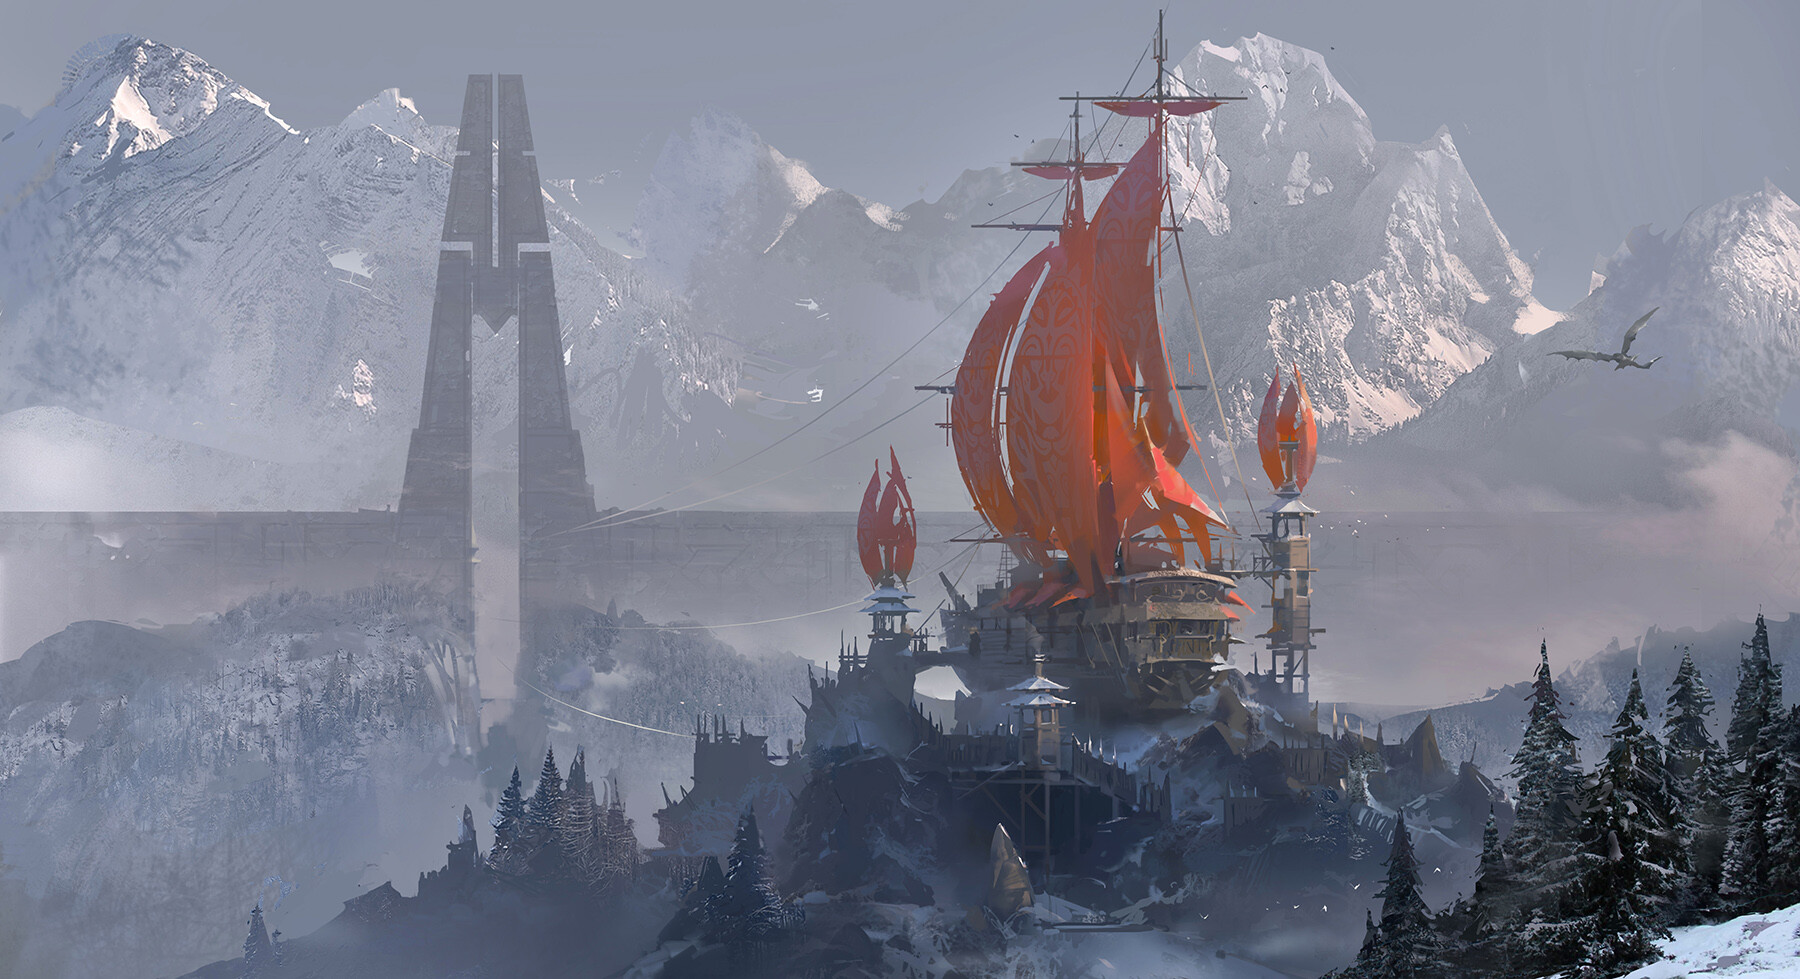 General 1800x979 digital art fantasy art 3 LY Studio ship mountains dragon landscape trees snow fantasy ship